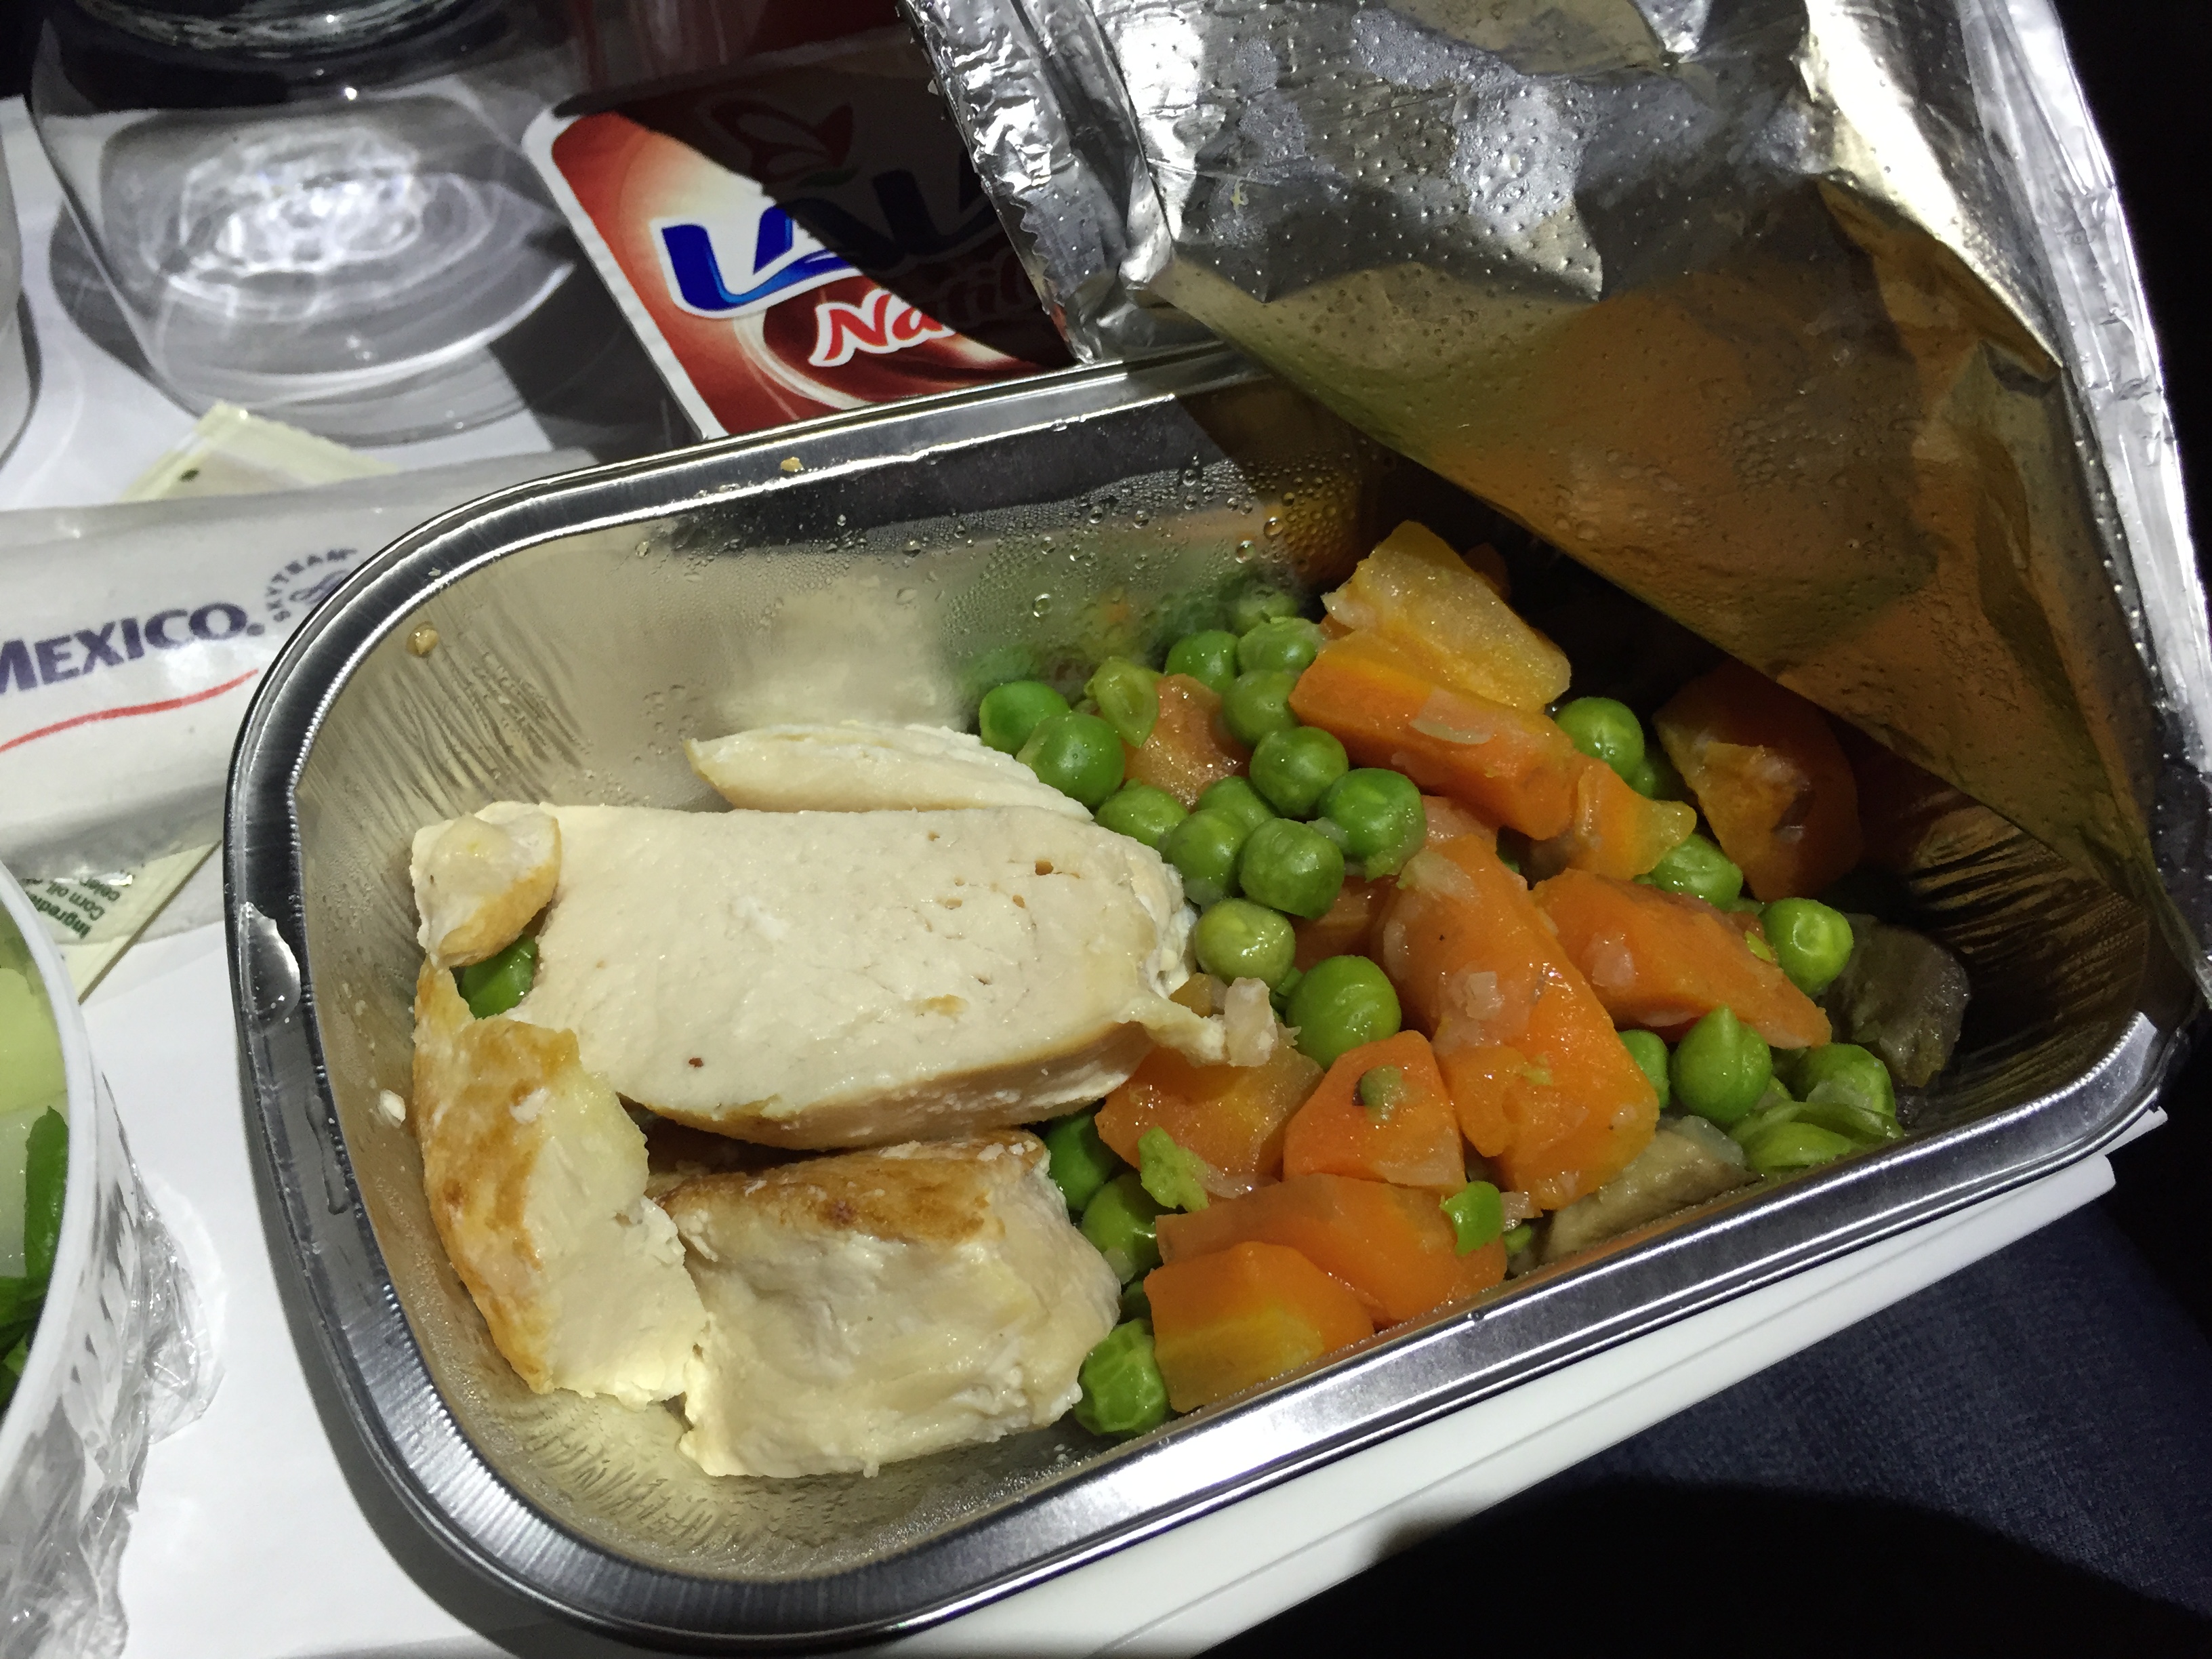 Pollo con verduras, fue mi elección en este vuelo. 